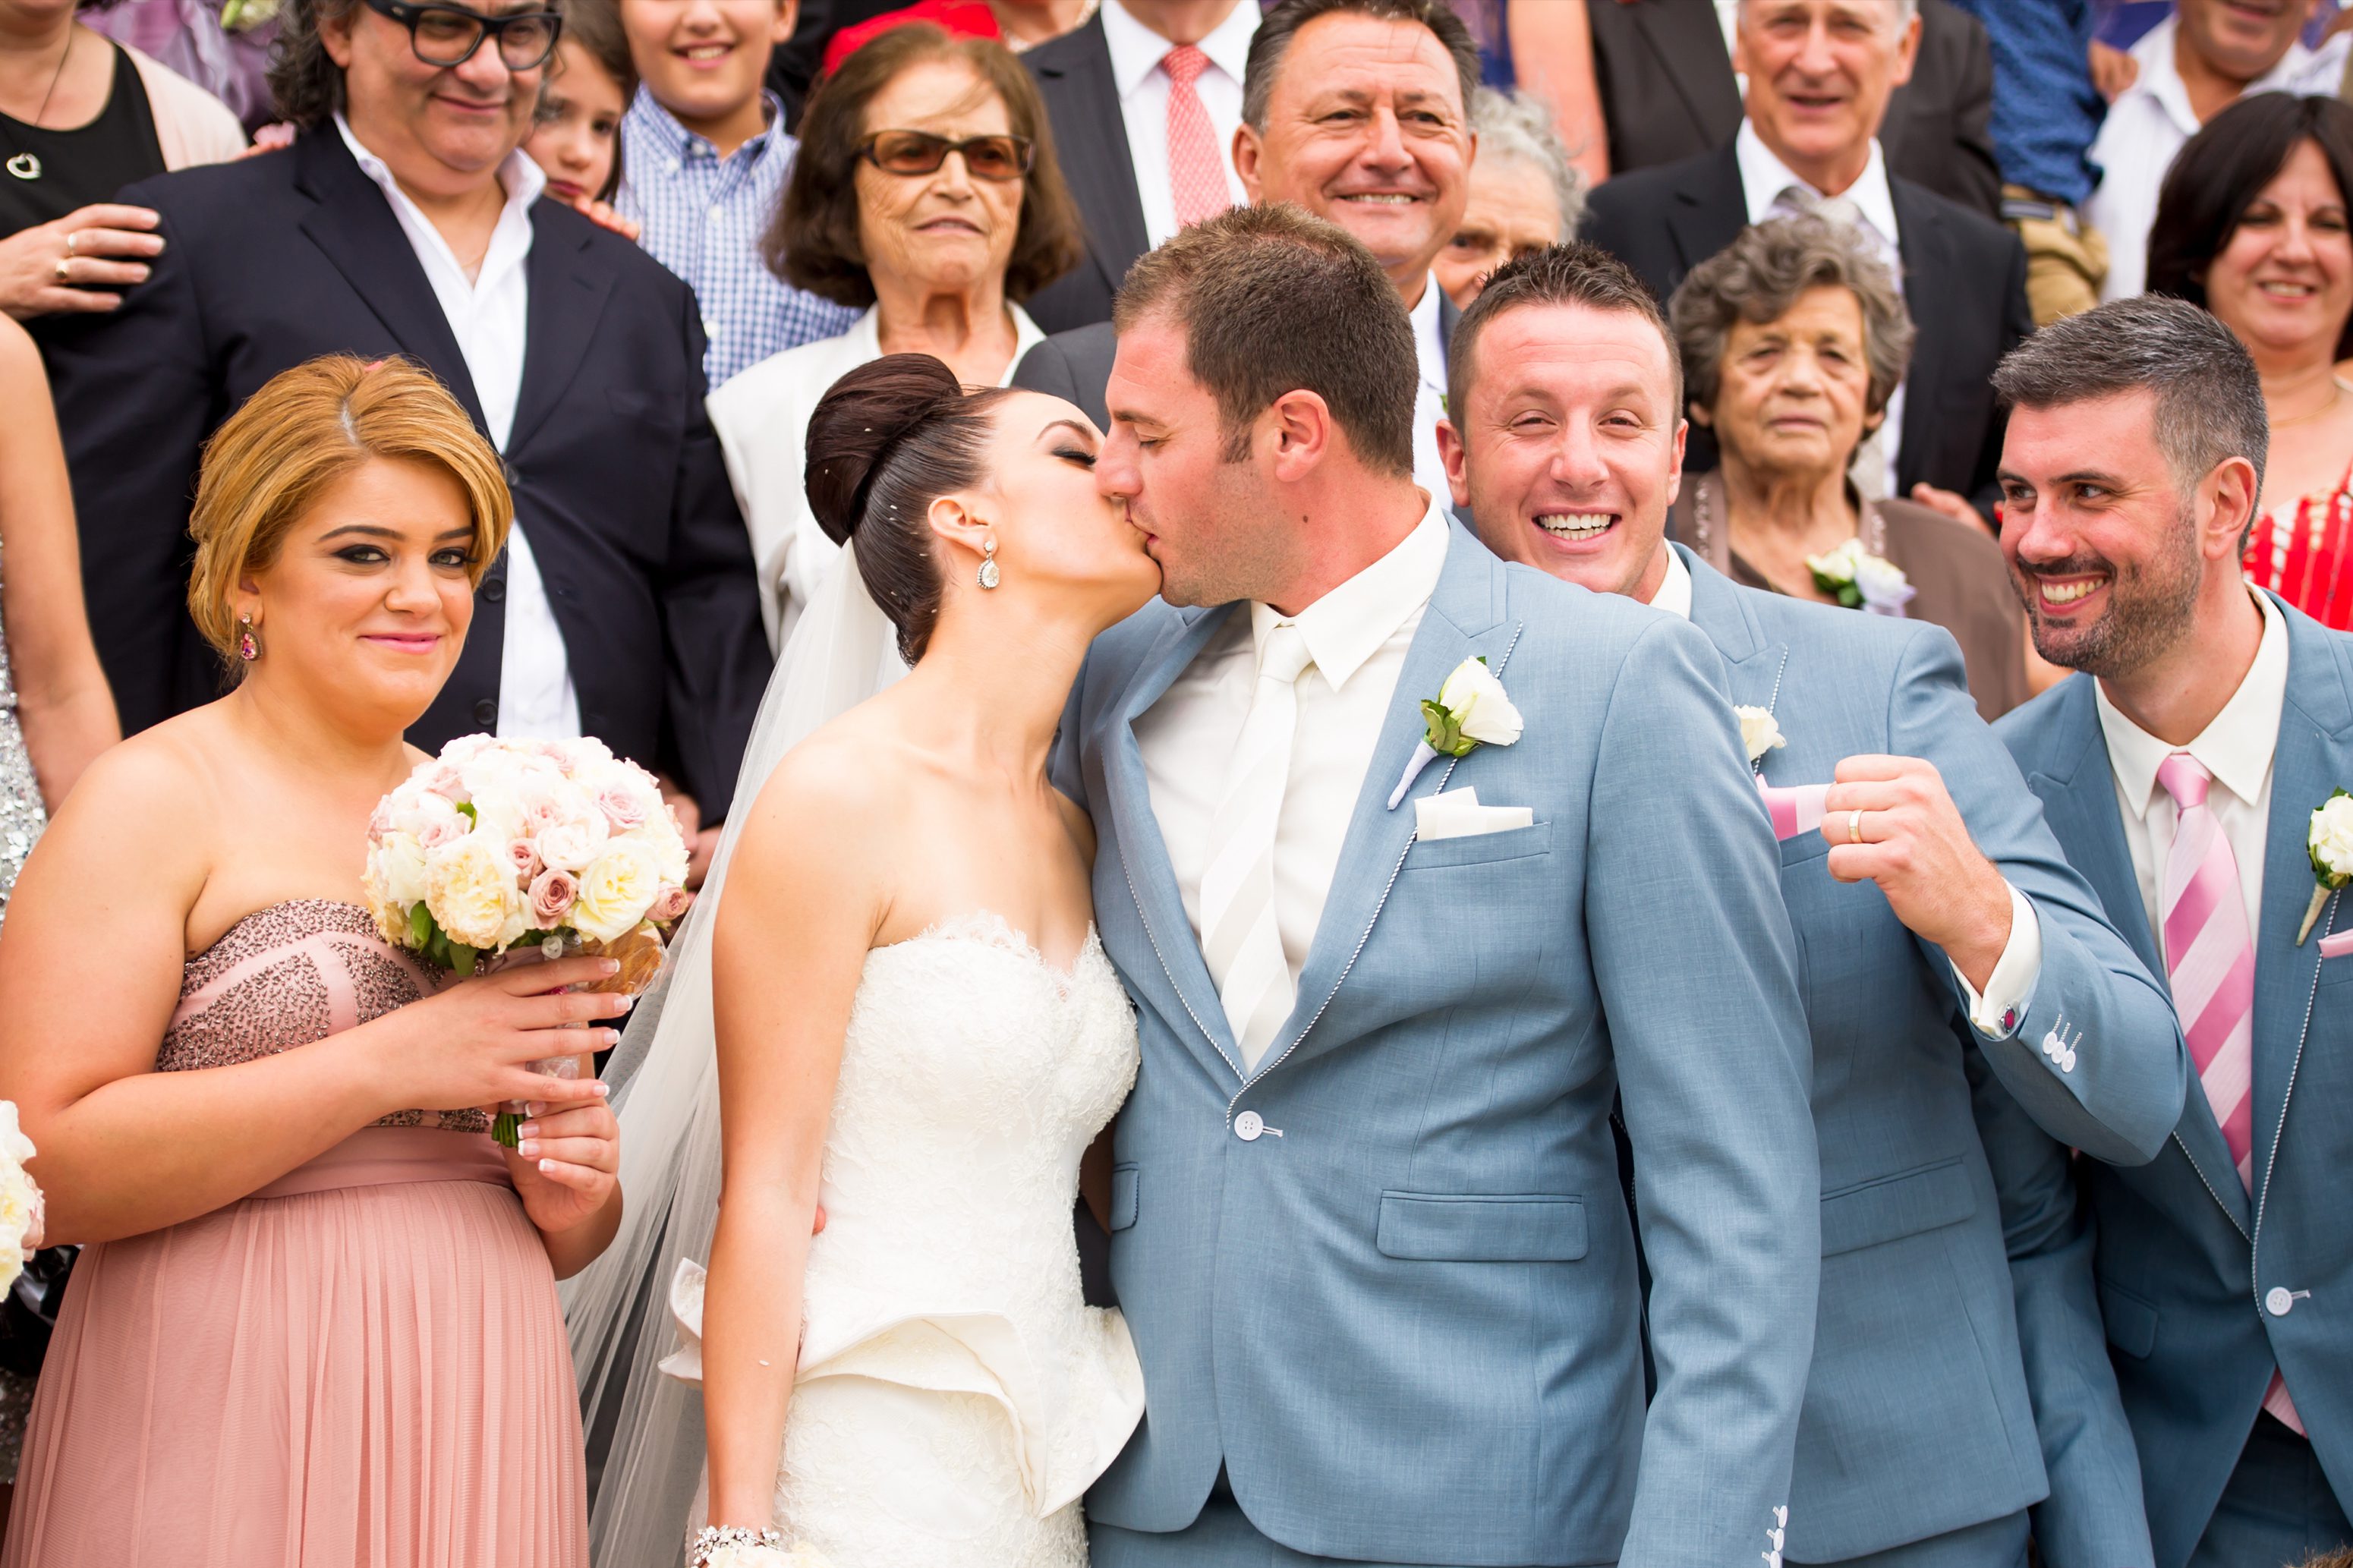 Greek Wedding Photoshoot in Sydney